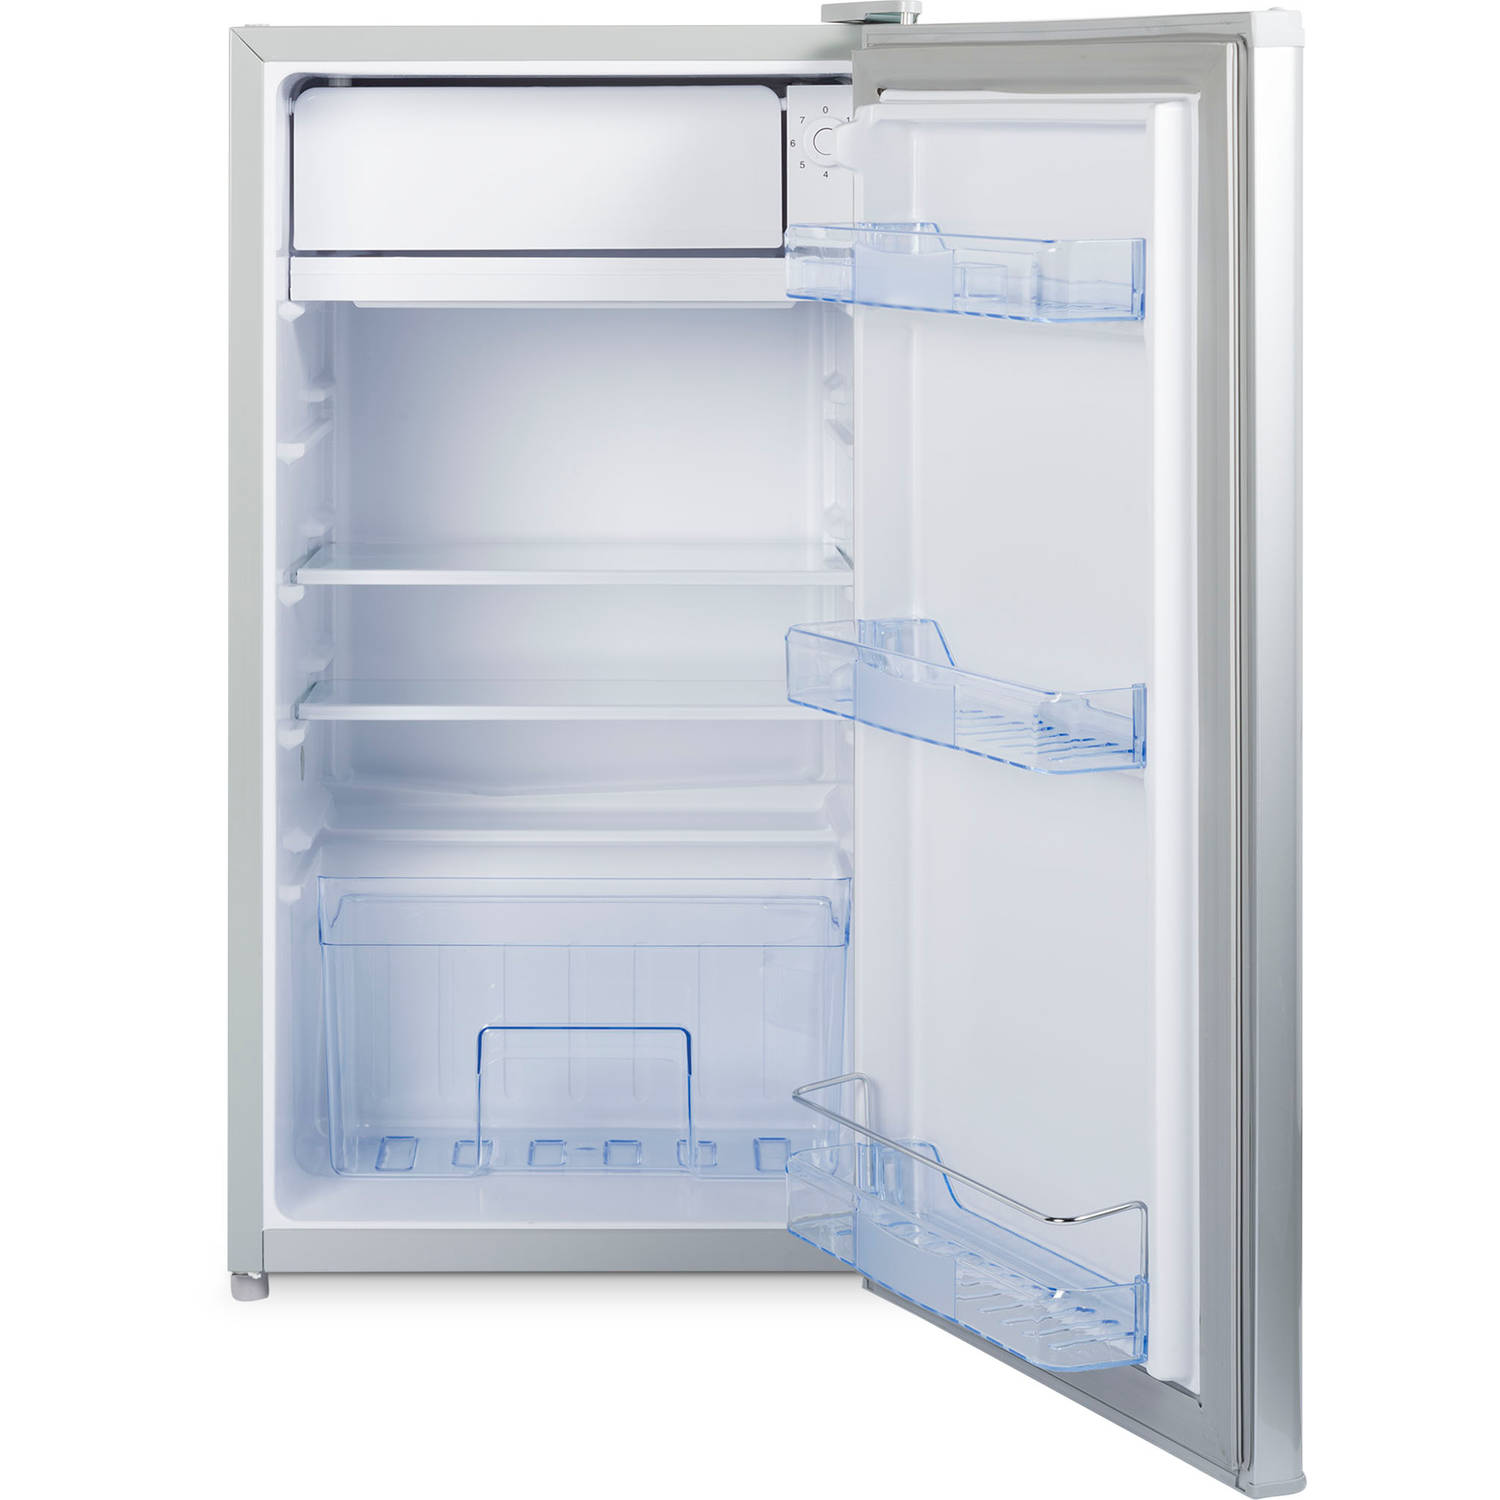 Hoofd zij is sterk KS-91 Tafelmodel koelkast 90L | Blokker